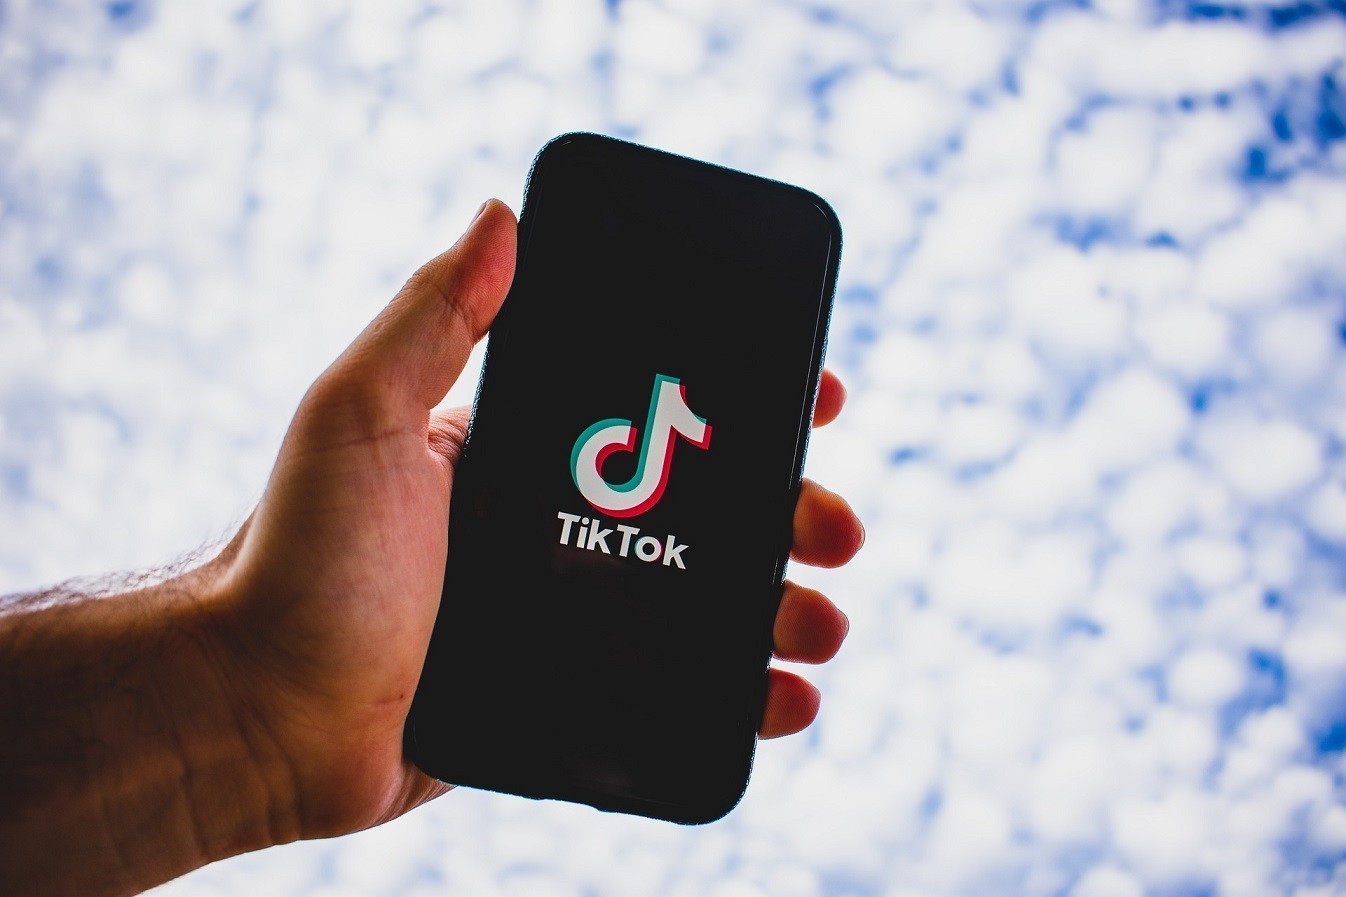 TikTok: Θέτει όριο για ημερήσια χρήση σε νέους κάτω των 18 ετών